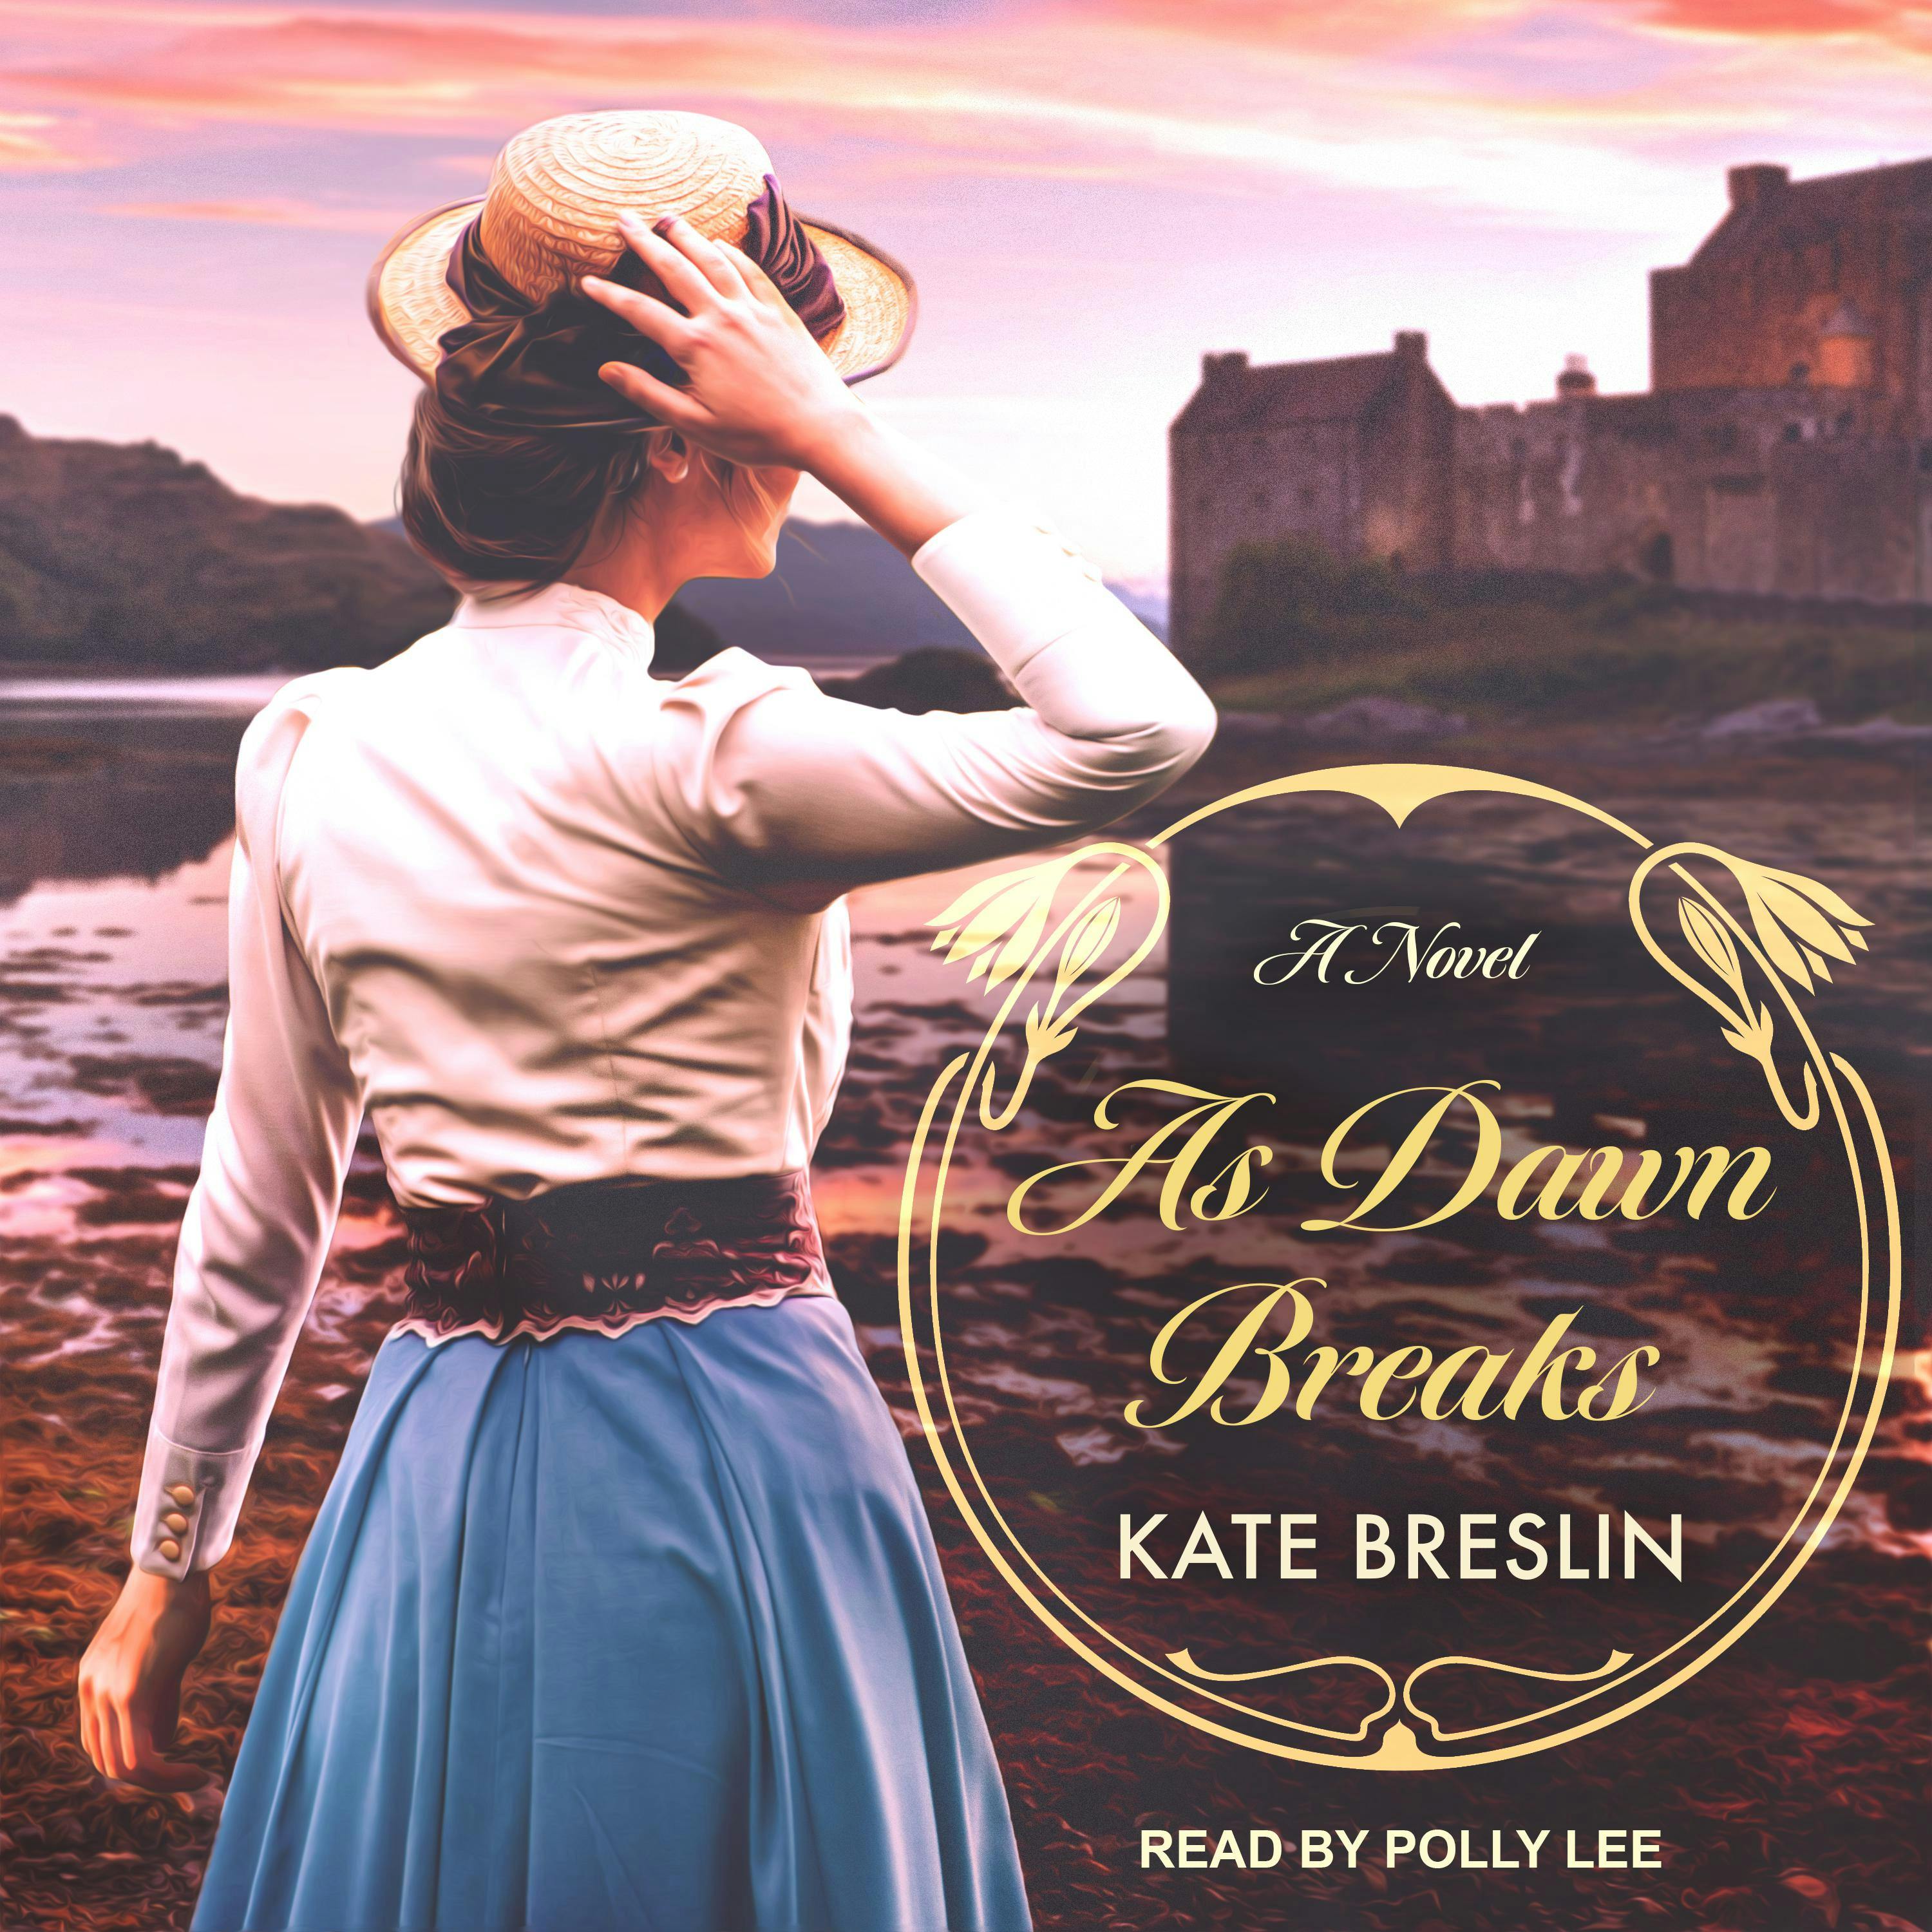 As Dawn Breaks - Kate Breslin